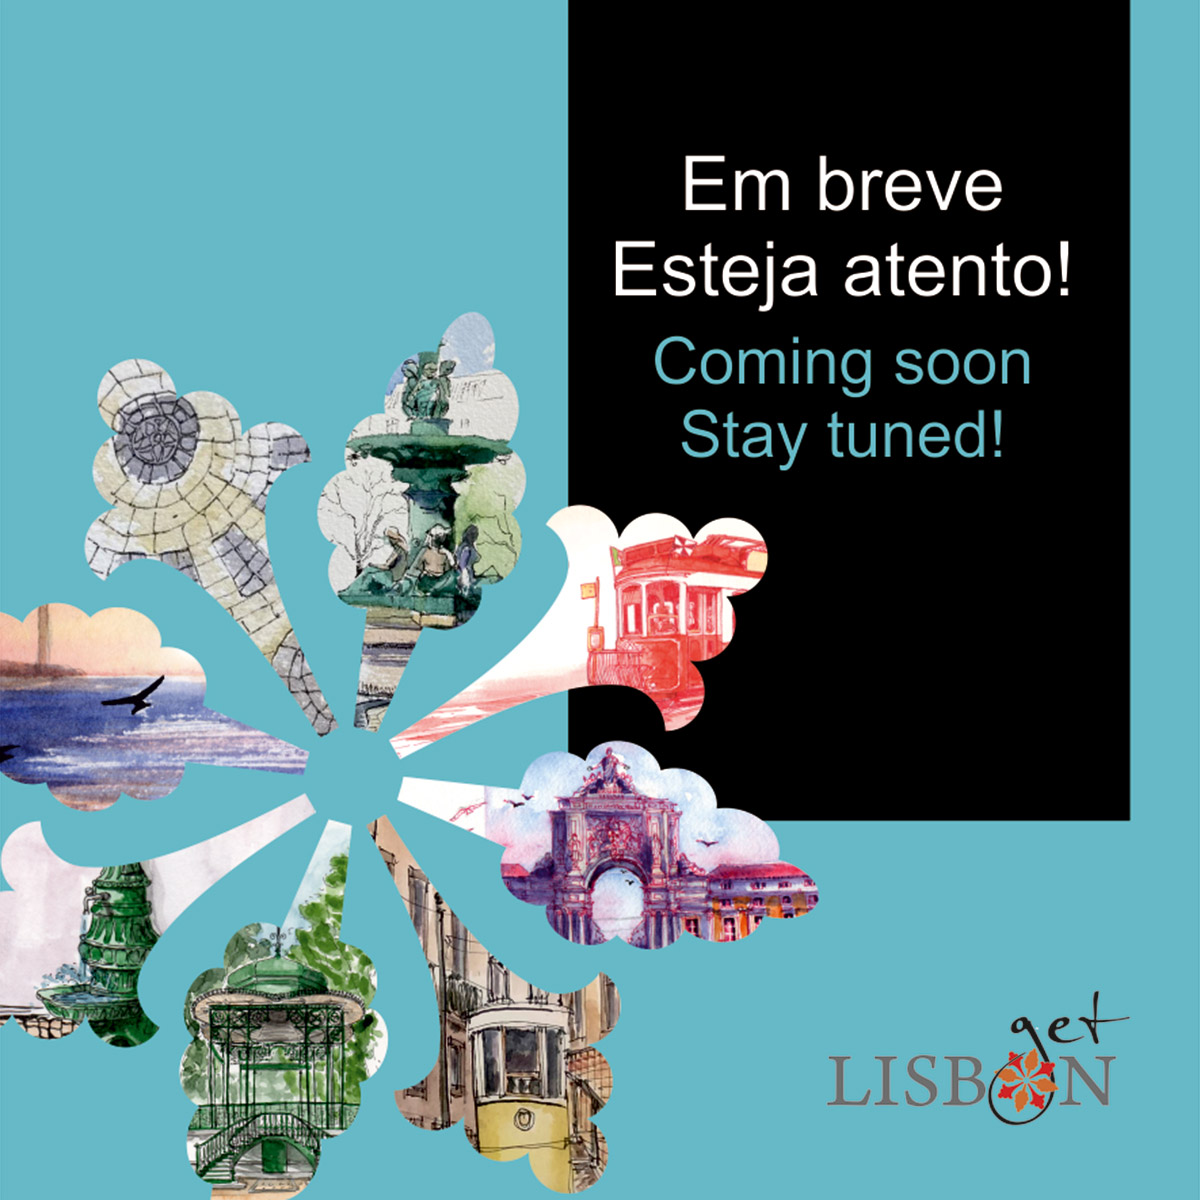 📢Novidades em breve! 😊 Esteja atento!
📣Exciting news coming soon! Stay tuned!😉
.
#lisboa #cultureguide #getLISBON #portugal #lisbon #travel #culture #lisbonlovers #visitlisboa #visitlisbon #visitportugal